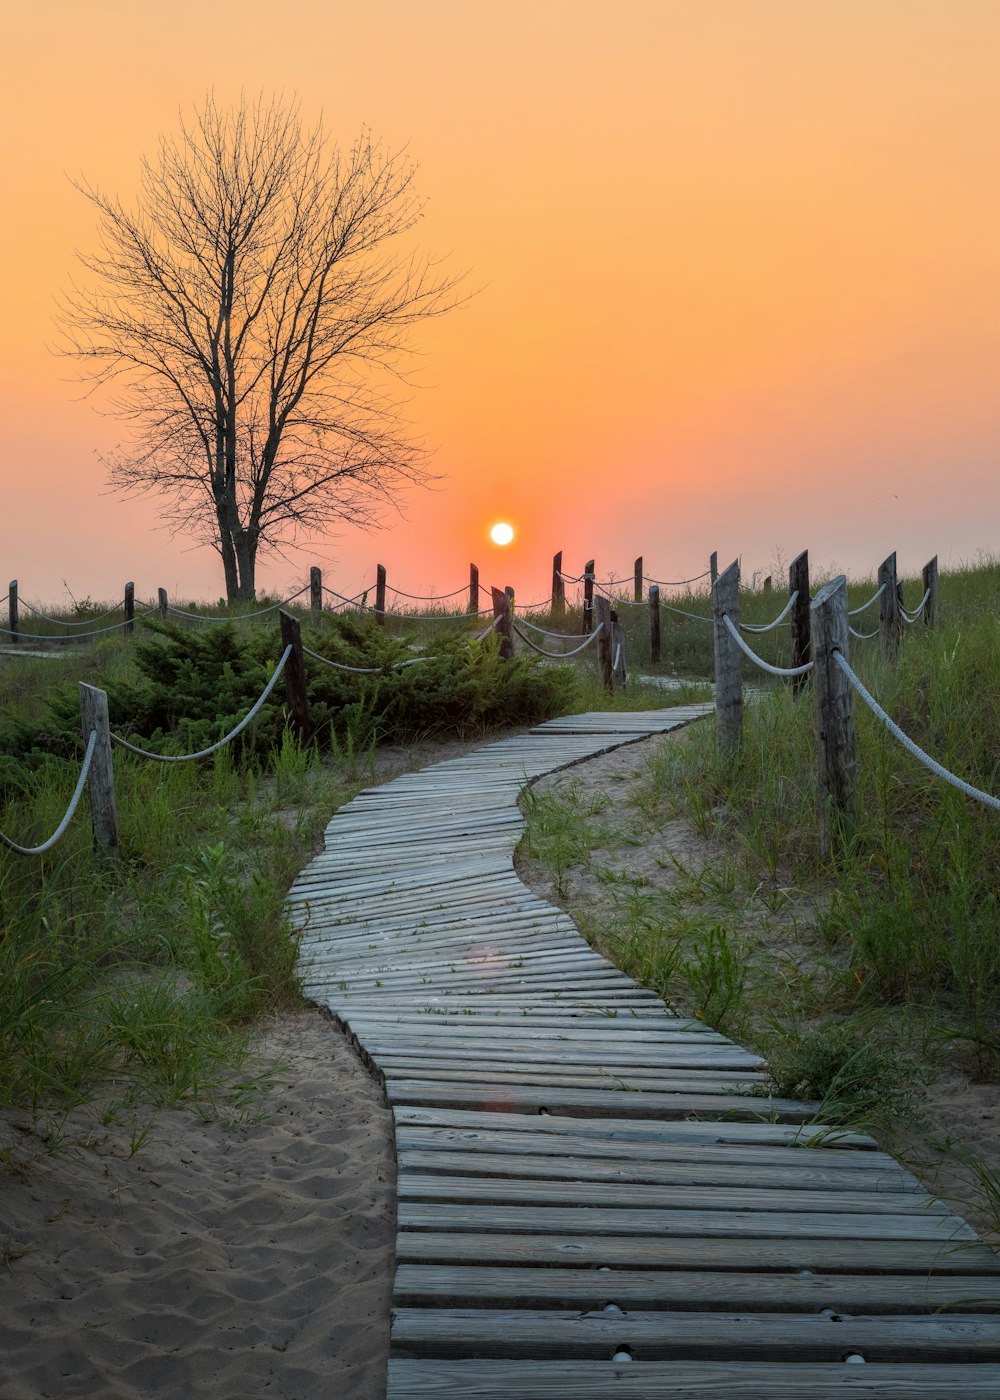 brown wooden pathway between green grass field during sunset